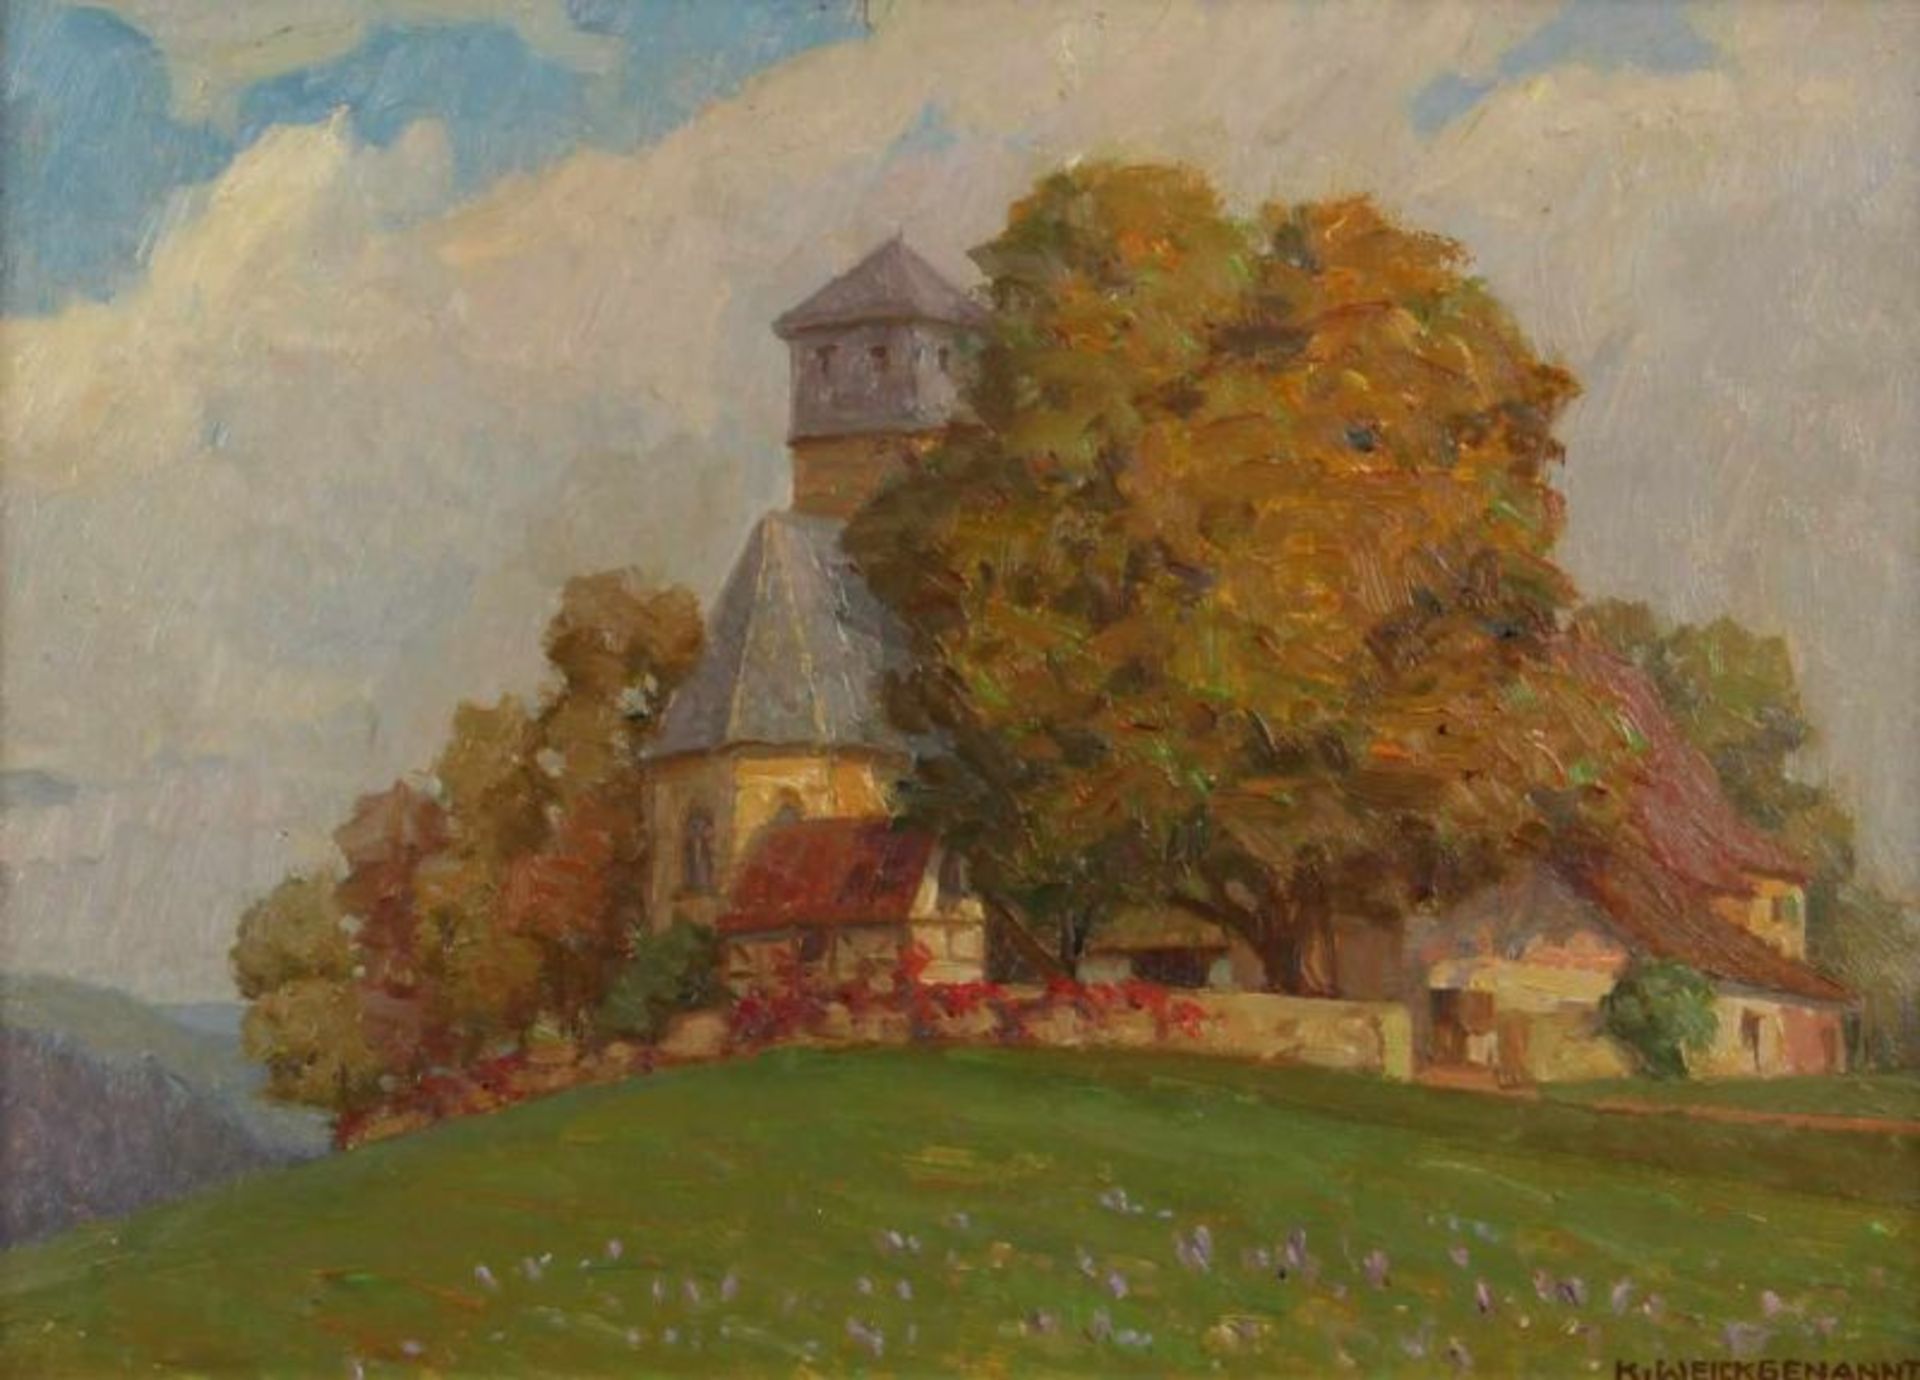 Weickgenannt, Karl (1896 Kehl - 1976 Karlsruhe, Landschaftsmaler), "Ottilienberg Eppingen", Öl auf